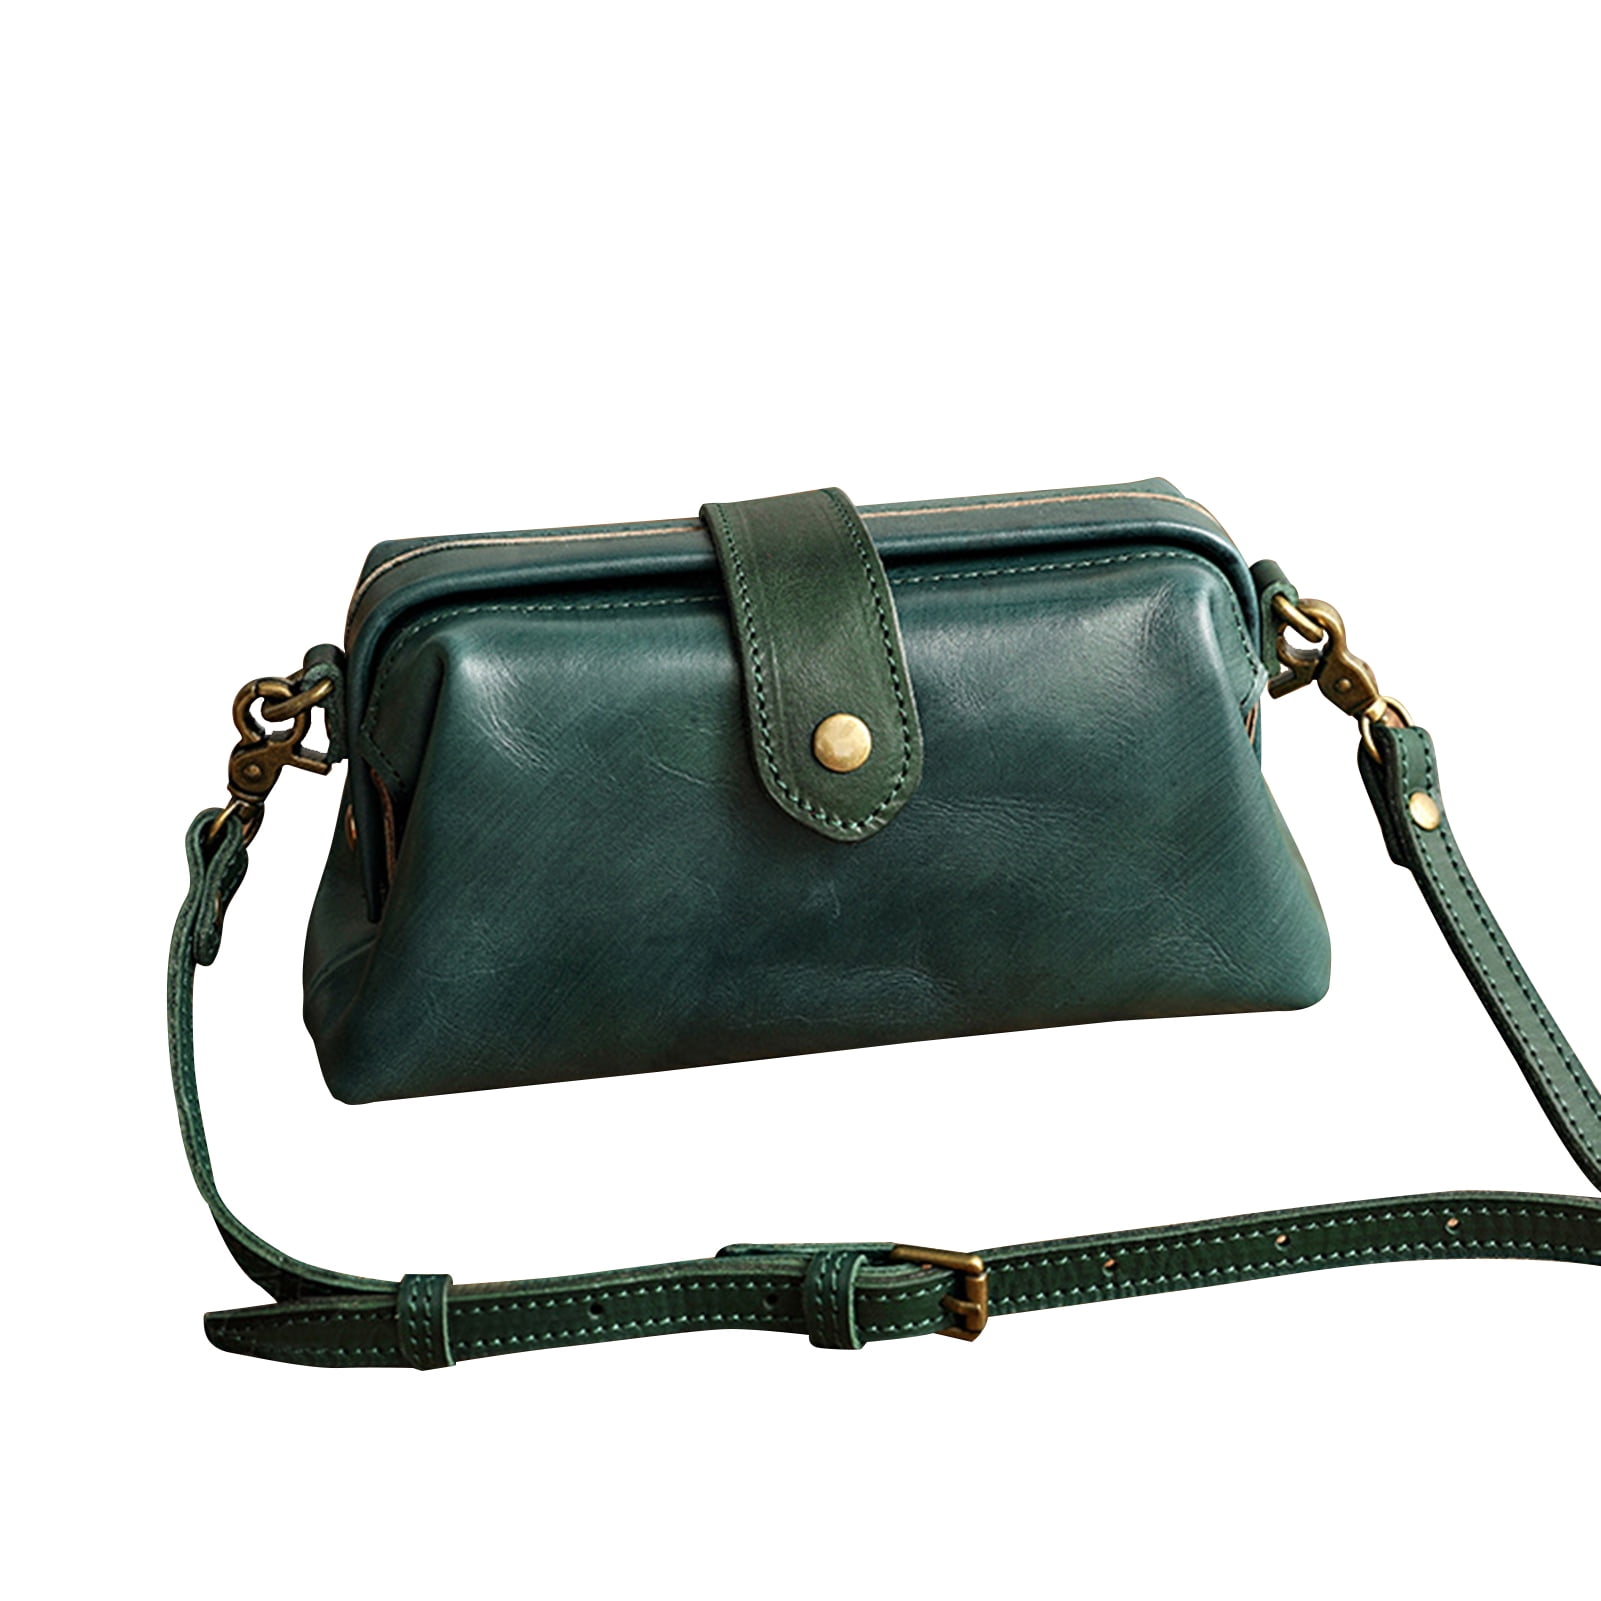 Details about   Leather Vintage Retro Women Shoulder Bag Satchel Handbag Tote Purse Messenger 9" 